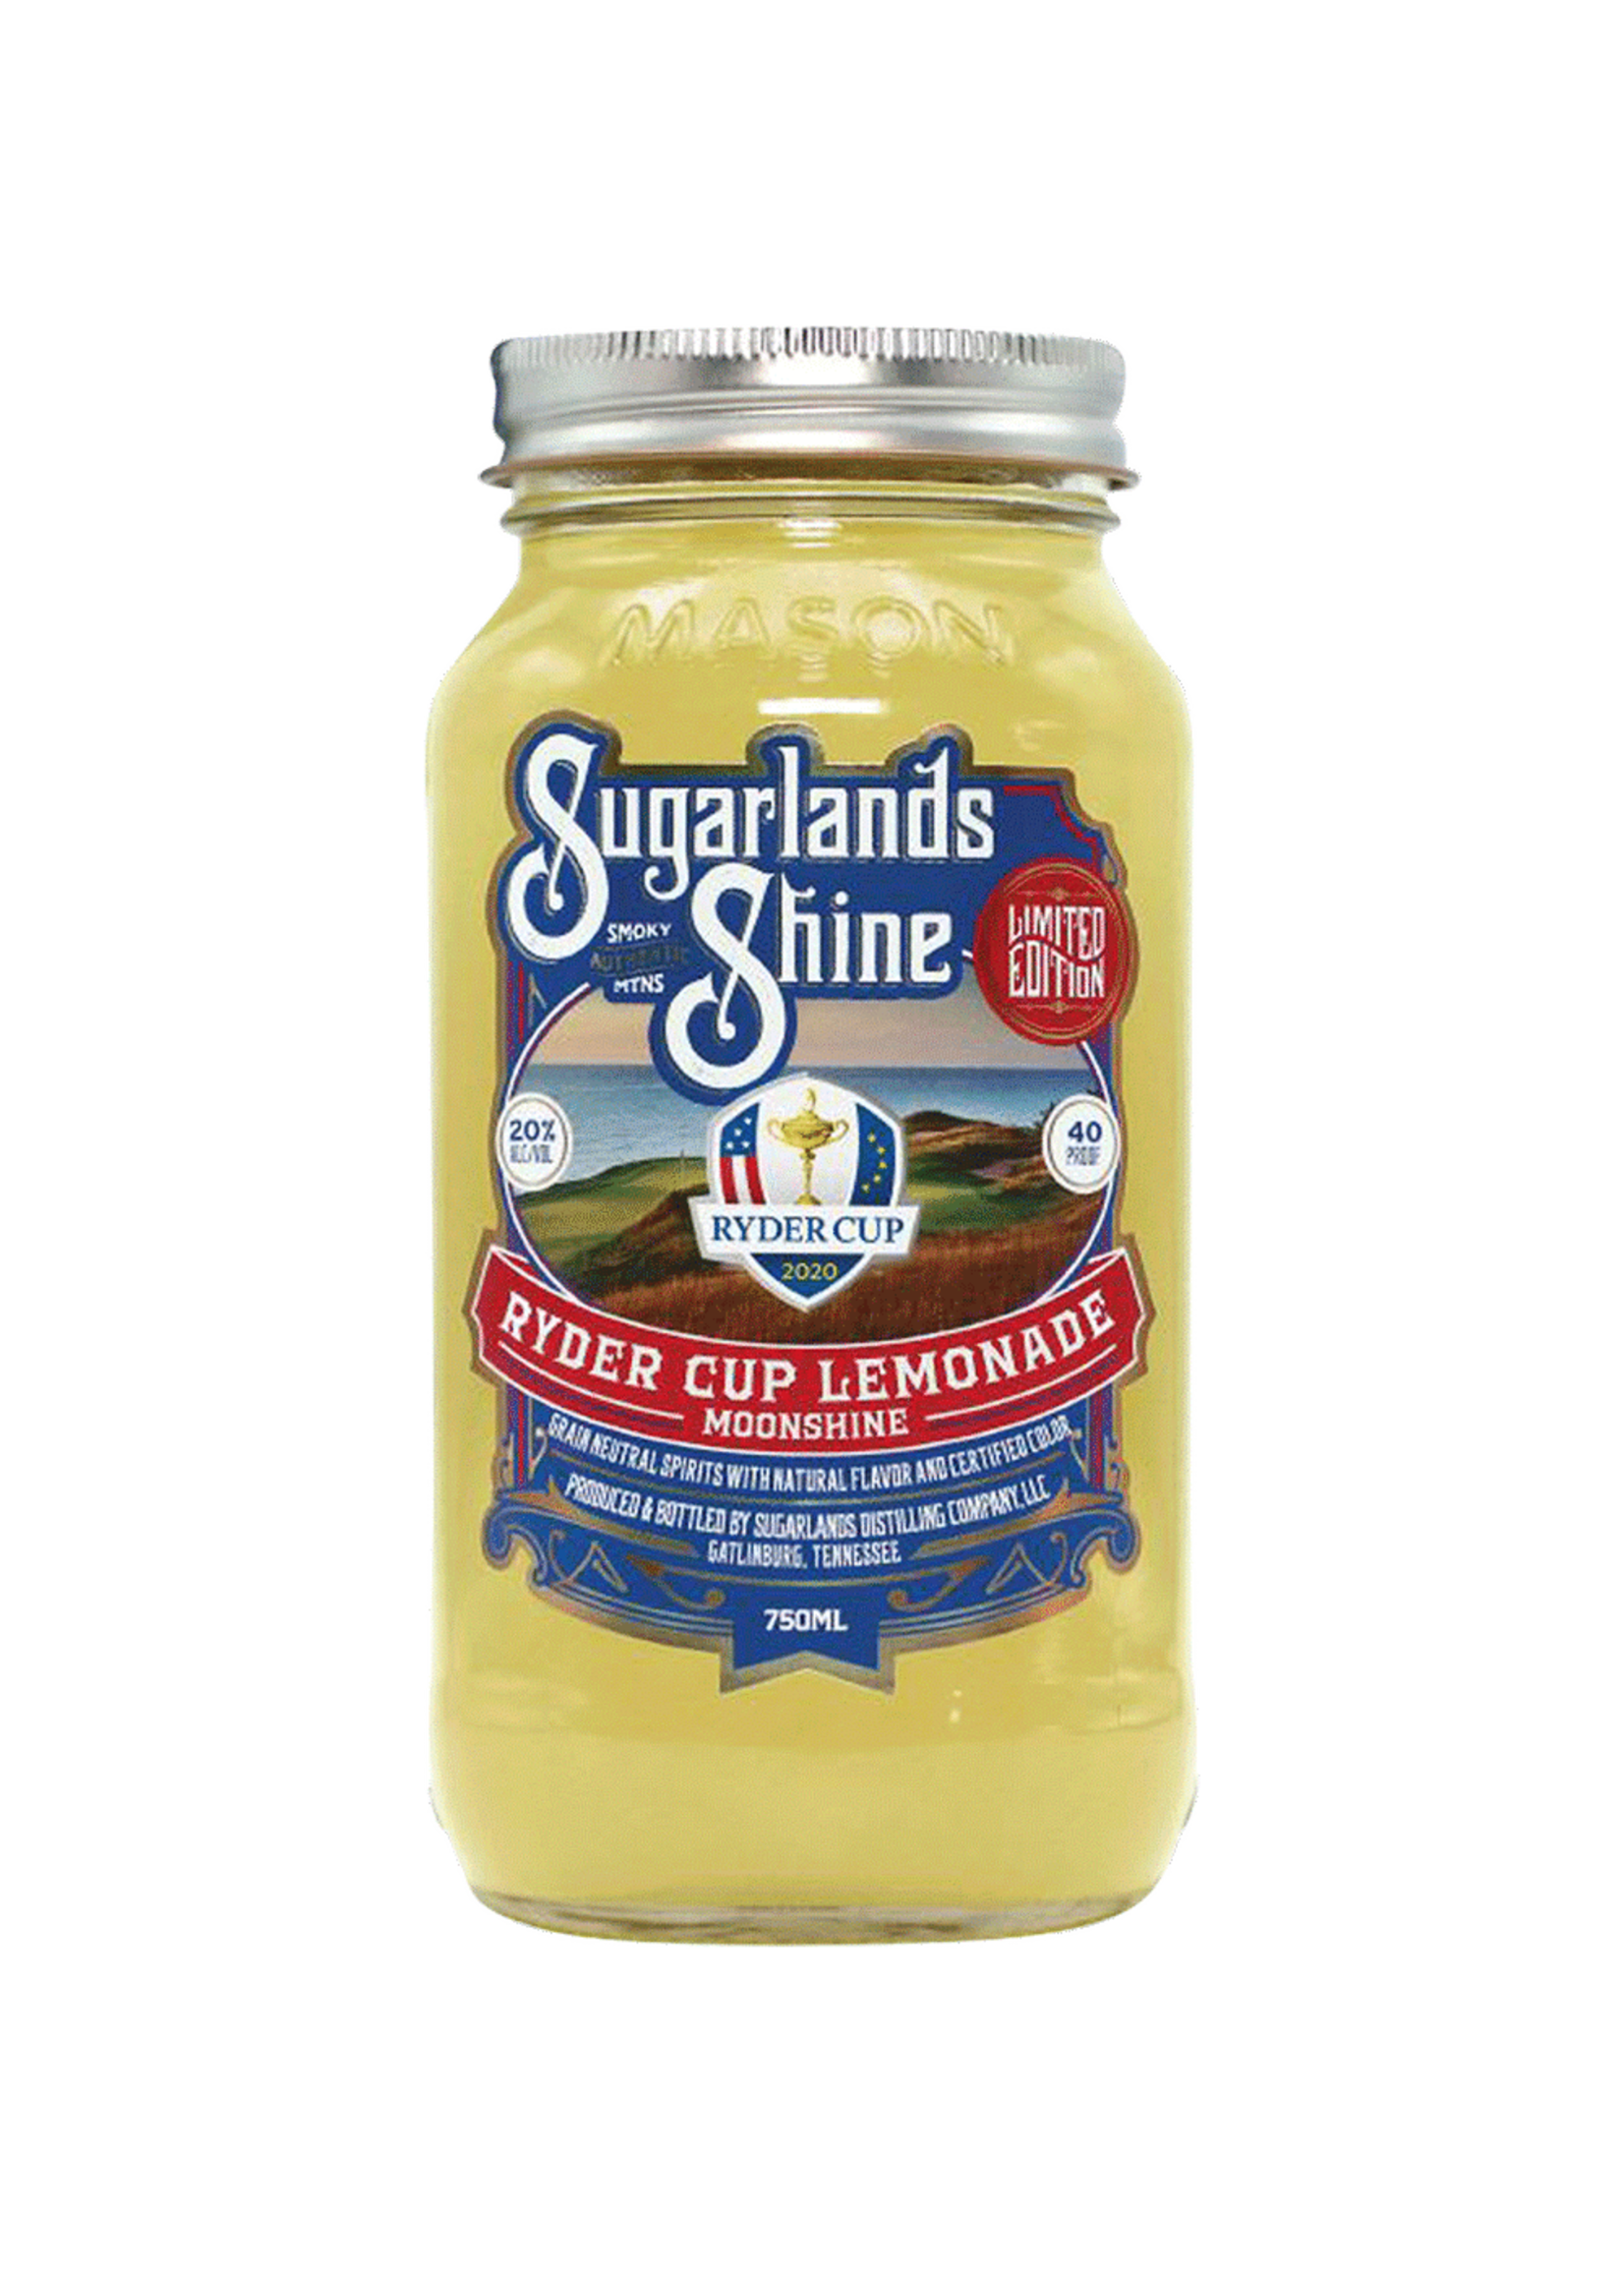 Sugarlands Moonshine & Sippin Cream Sugarlands Shine Ryder Cup Lemonade 40Proof Jar 750ml